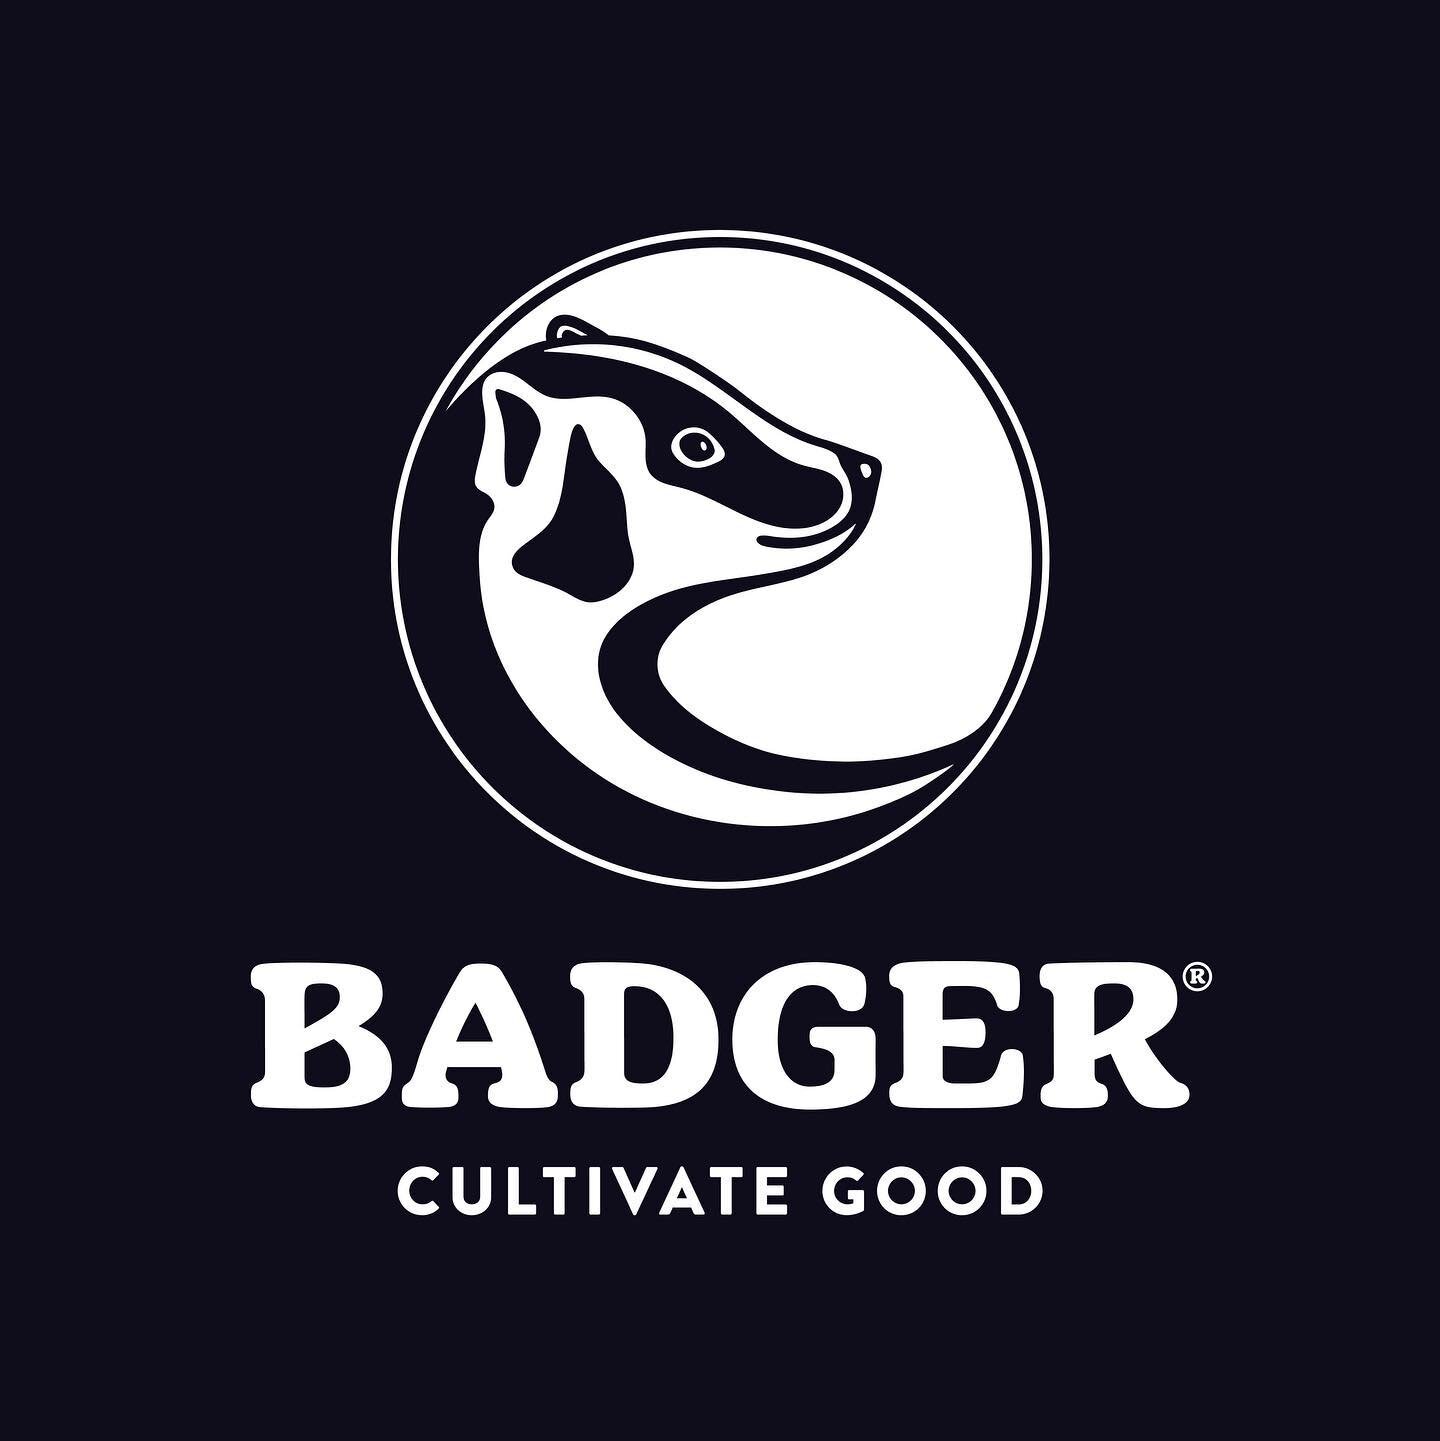 Branding and packaging design for Badger, a family owned, organic skincare brand